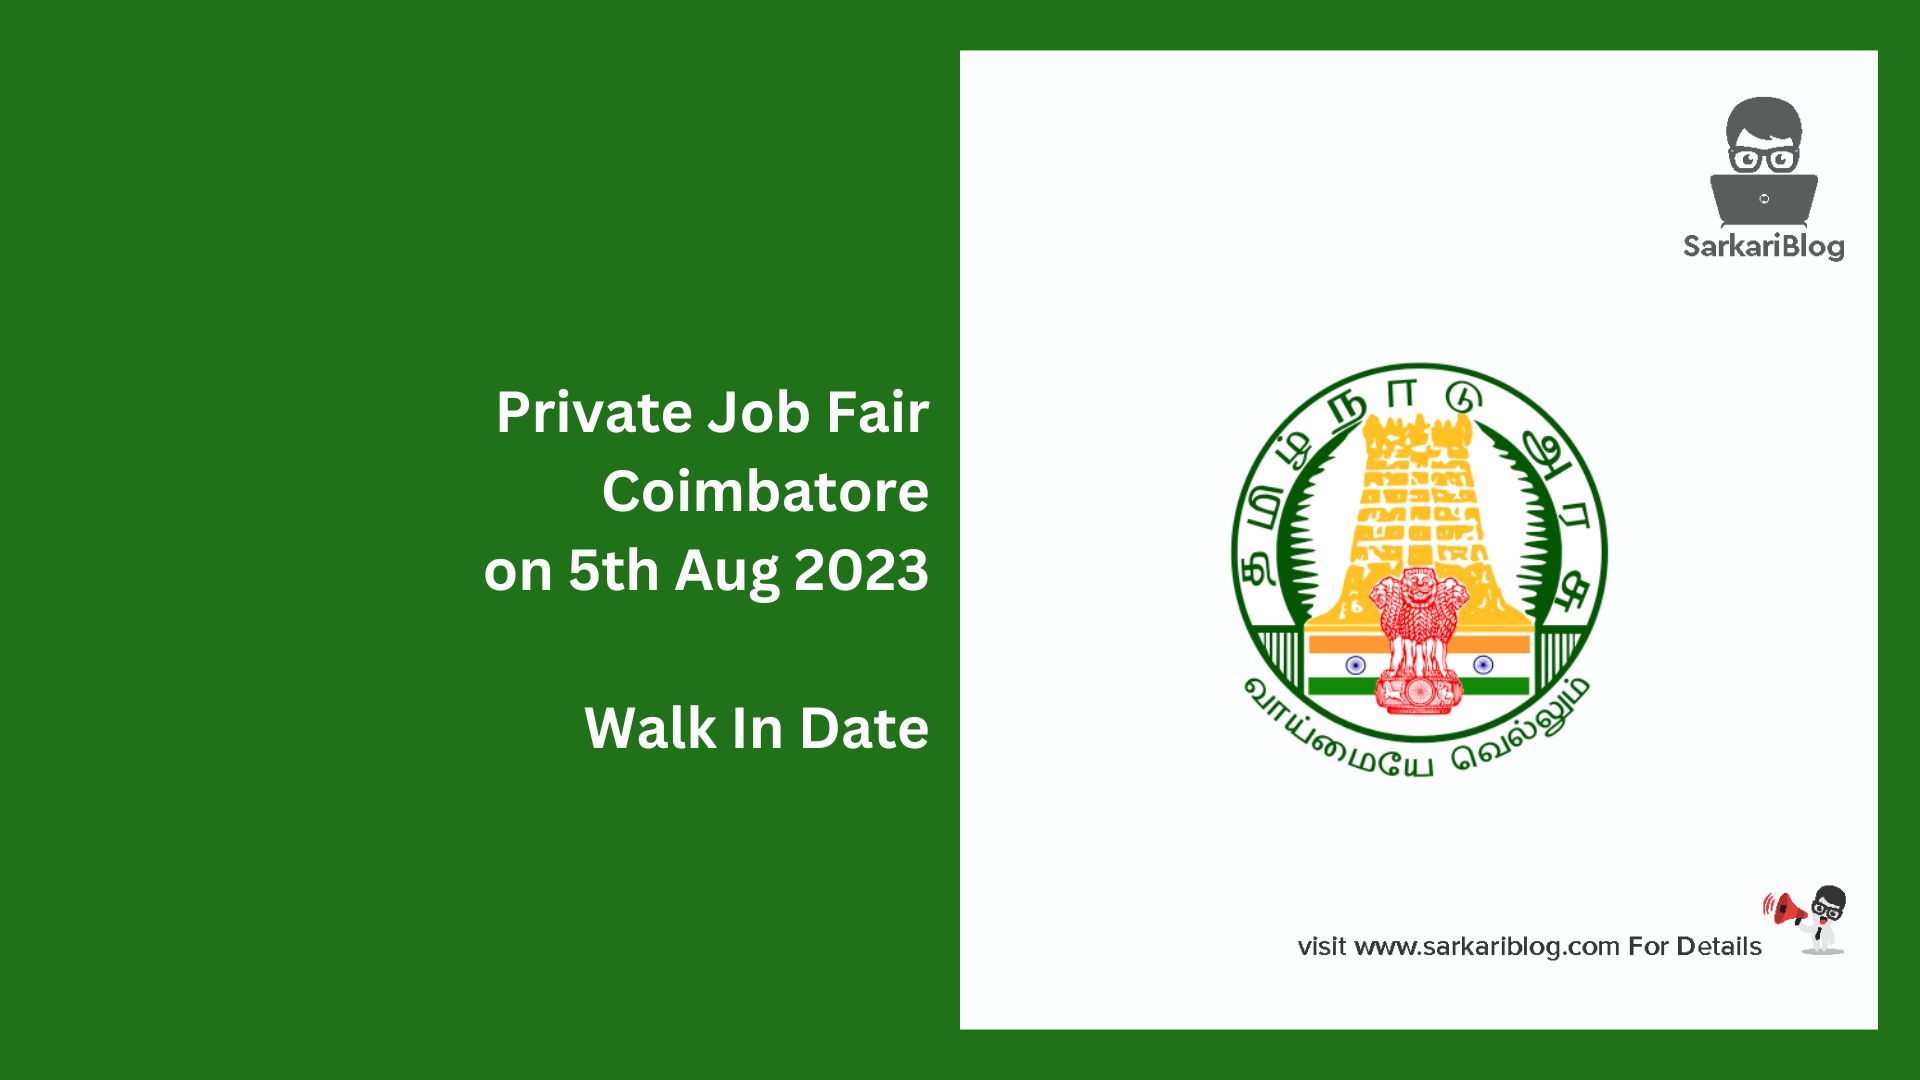 Private Job Fair Coimbatore on 5th Aug 2023